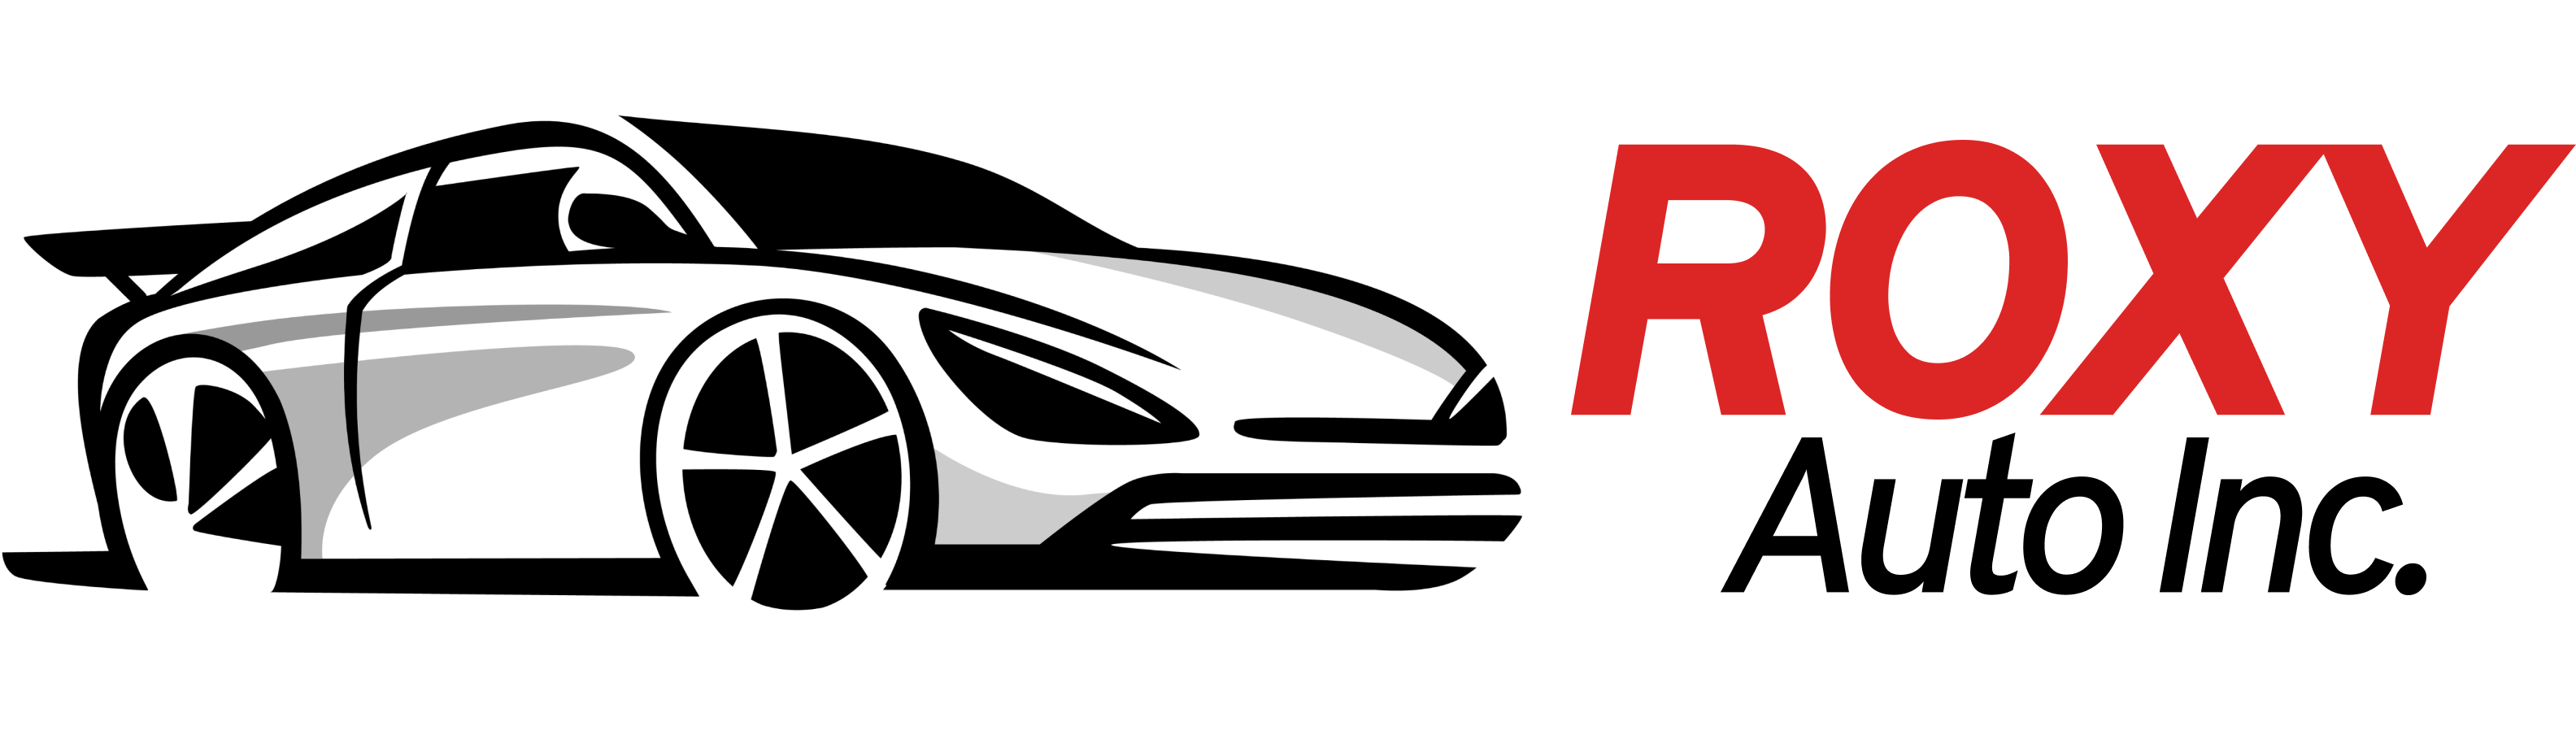 Roxy Auto Inc logo